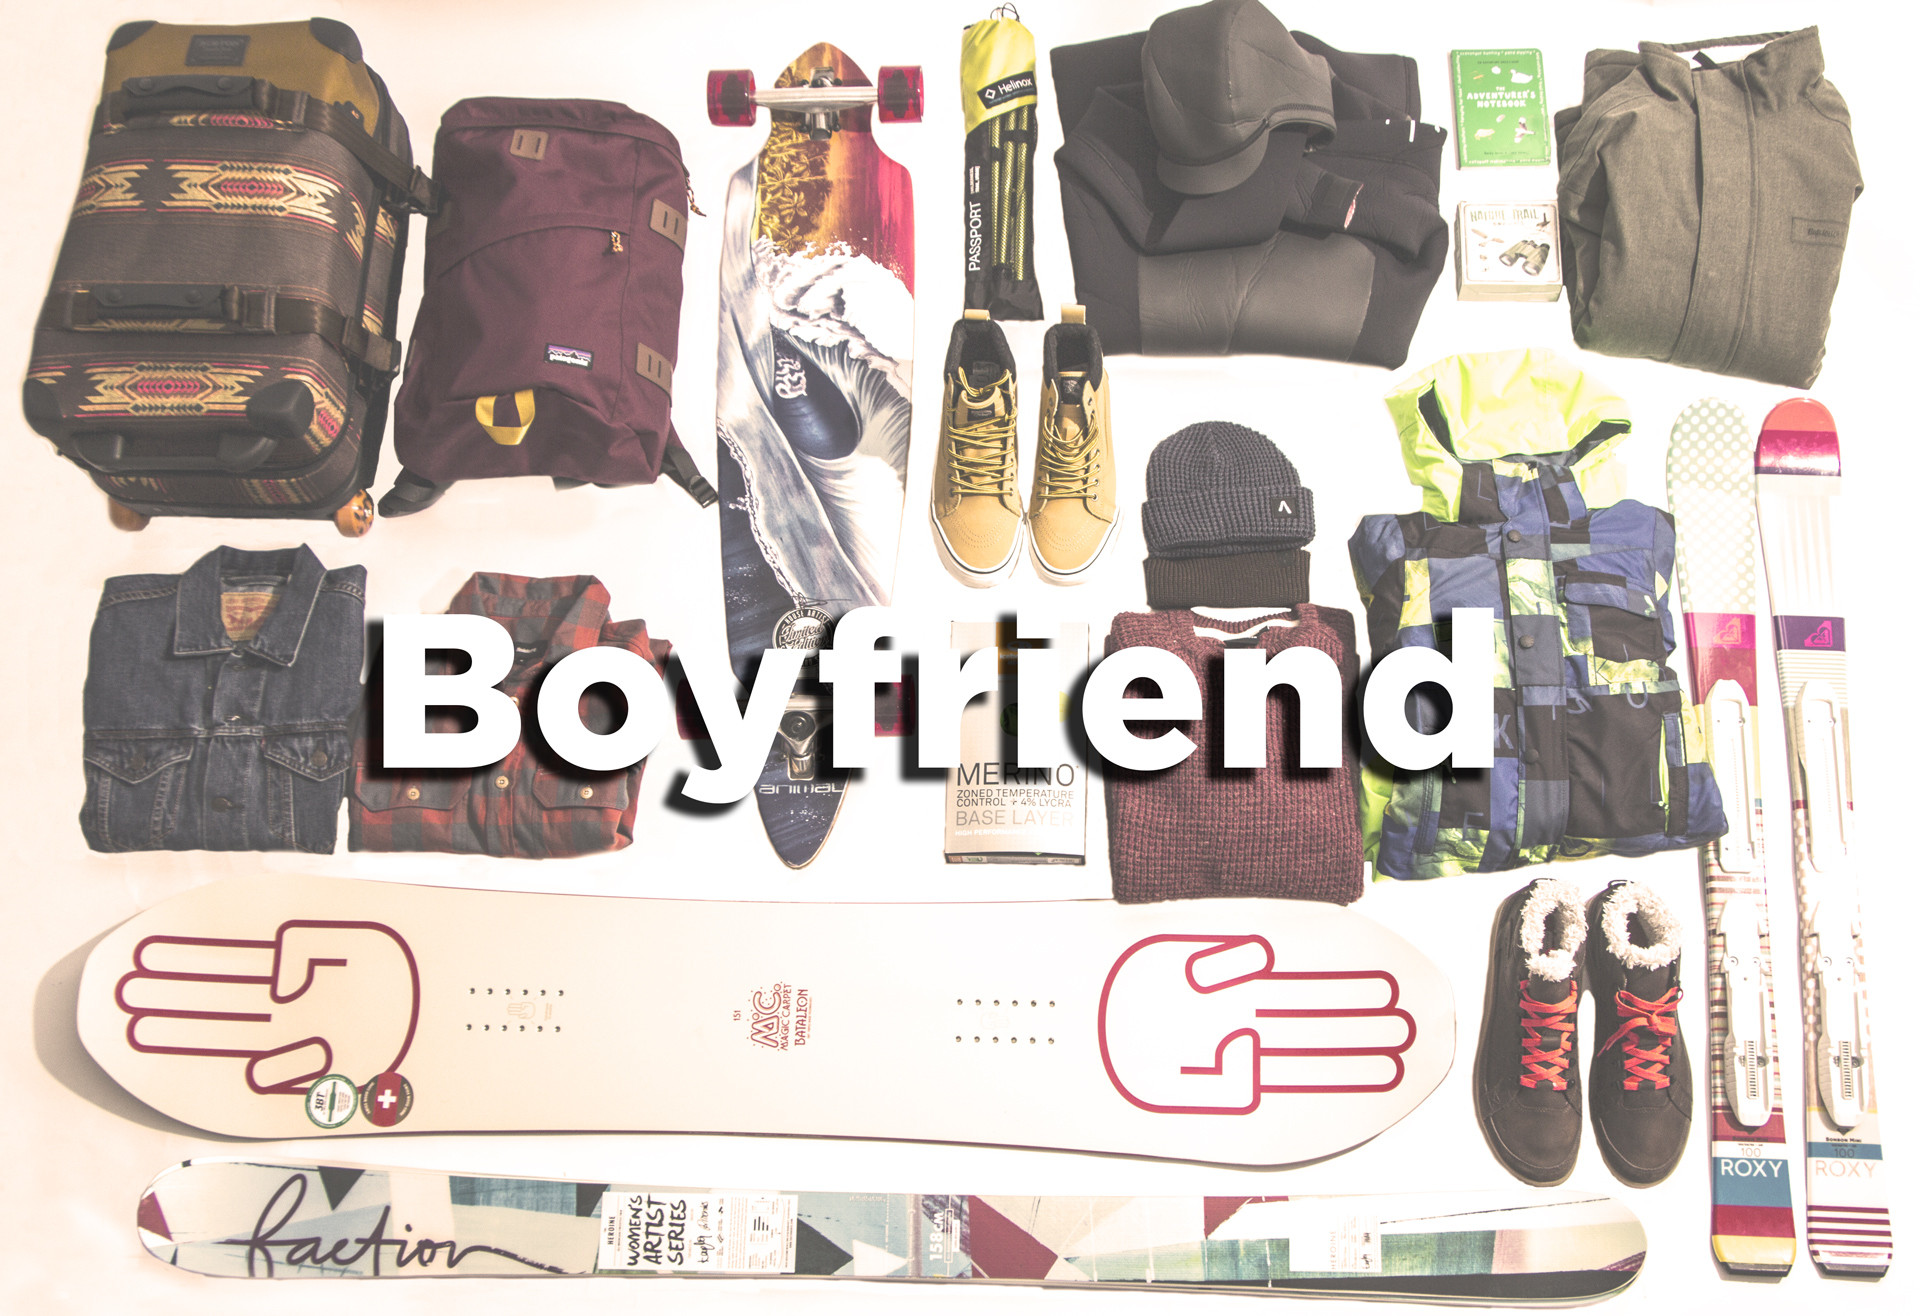 New Boyfriend Christmas Gift Ideas
 Christmas Gift Ideas For A Boyfriend 15 Great Gifts